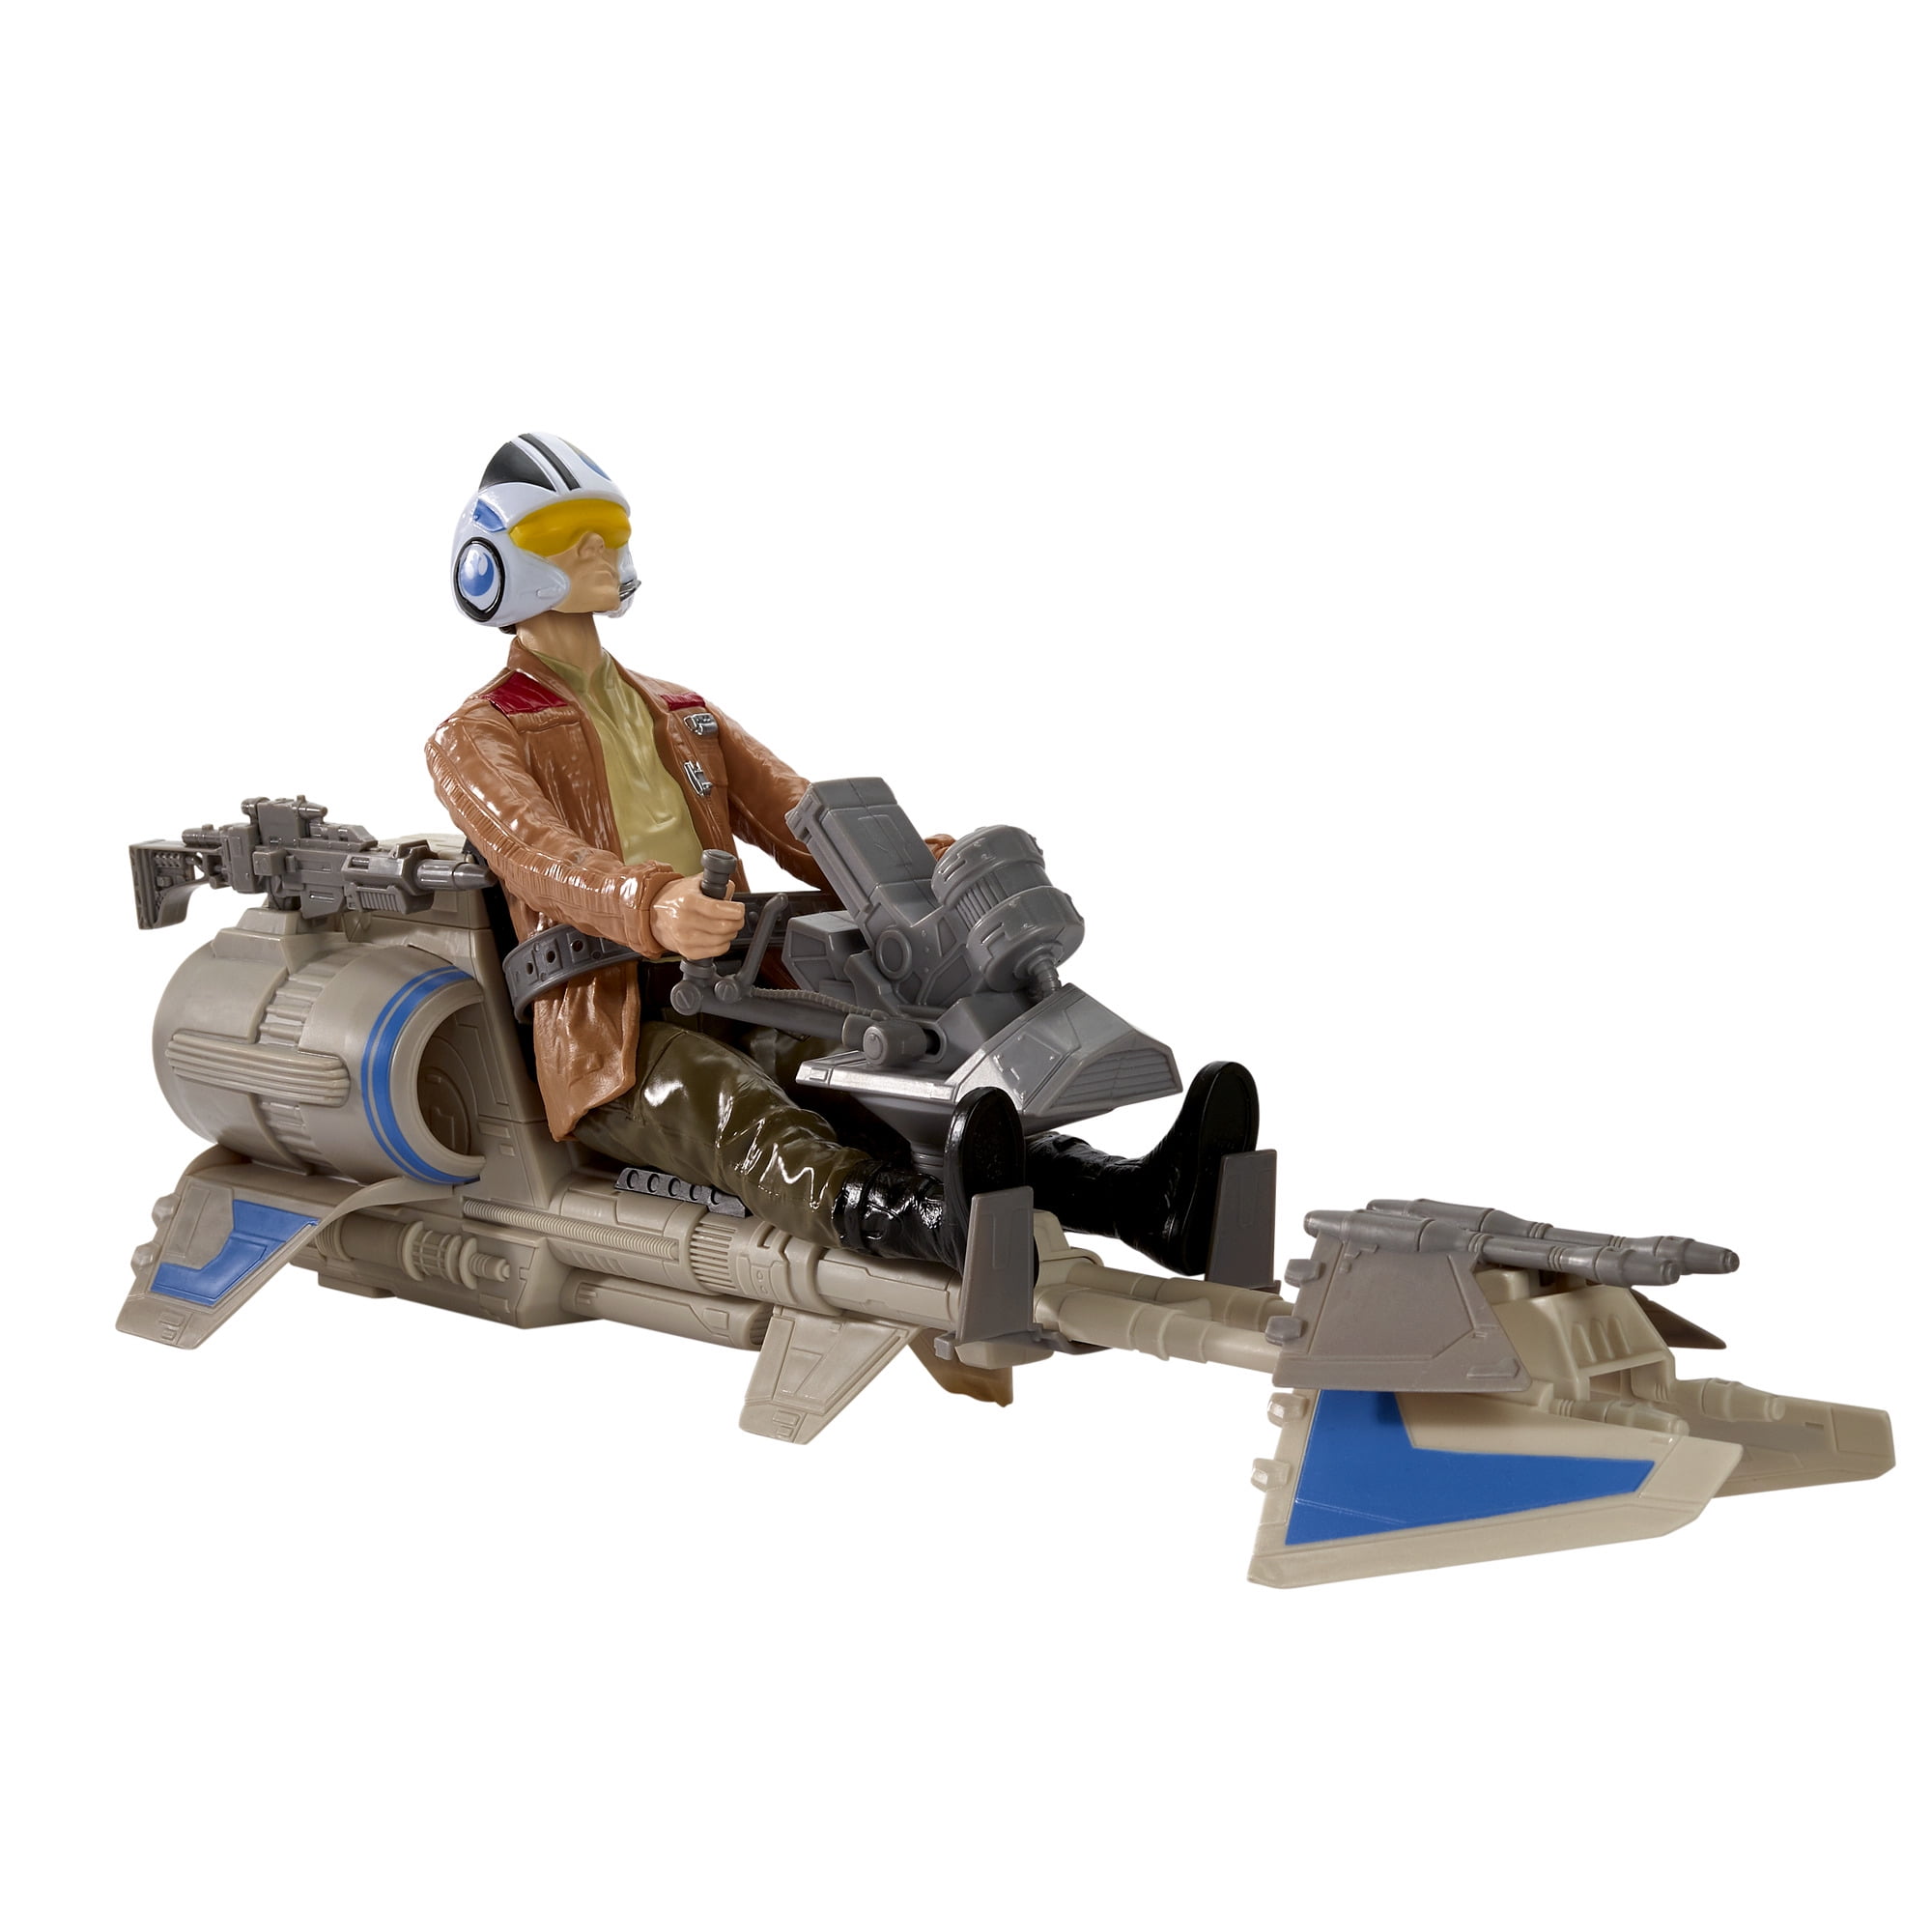 Star Wars The Force Awakens Speeder Bike and Poe Dameron 12-Inch Figure Hasbro B3917